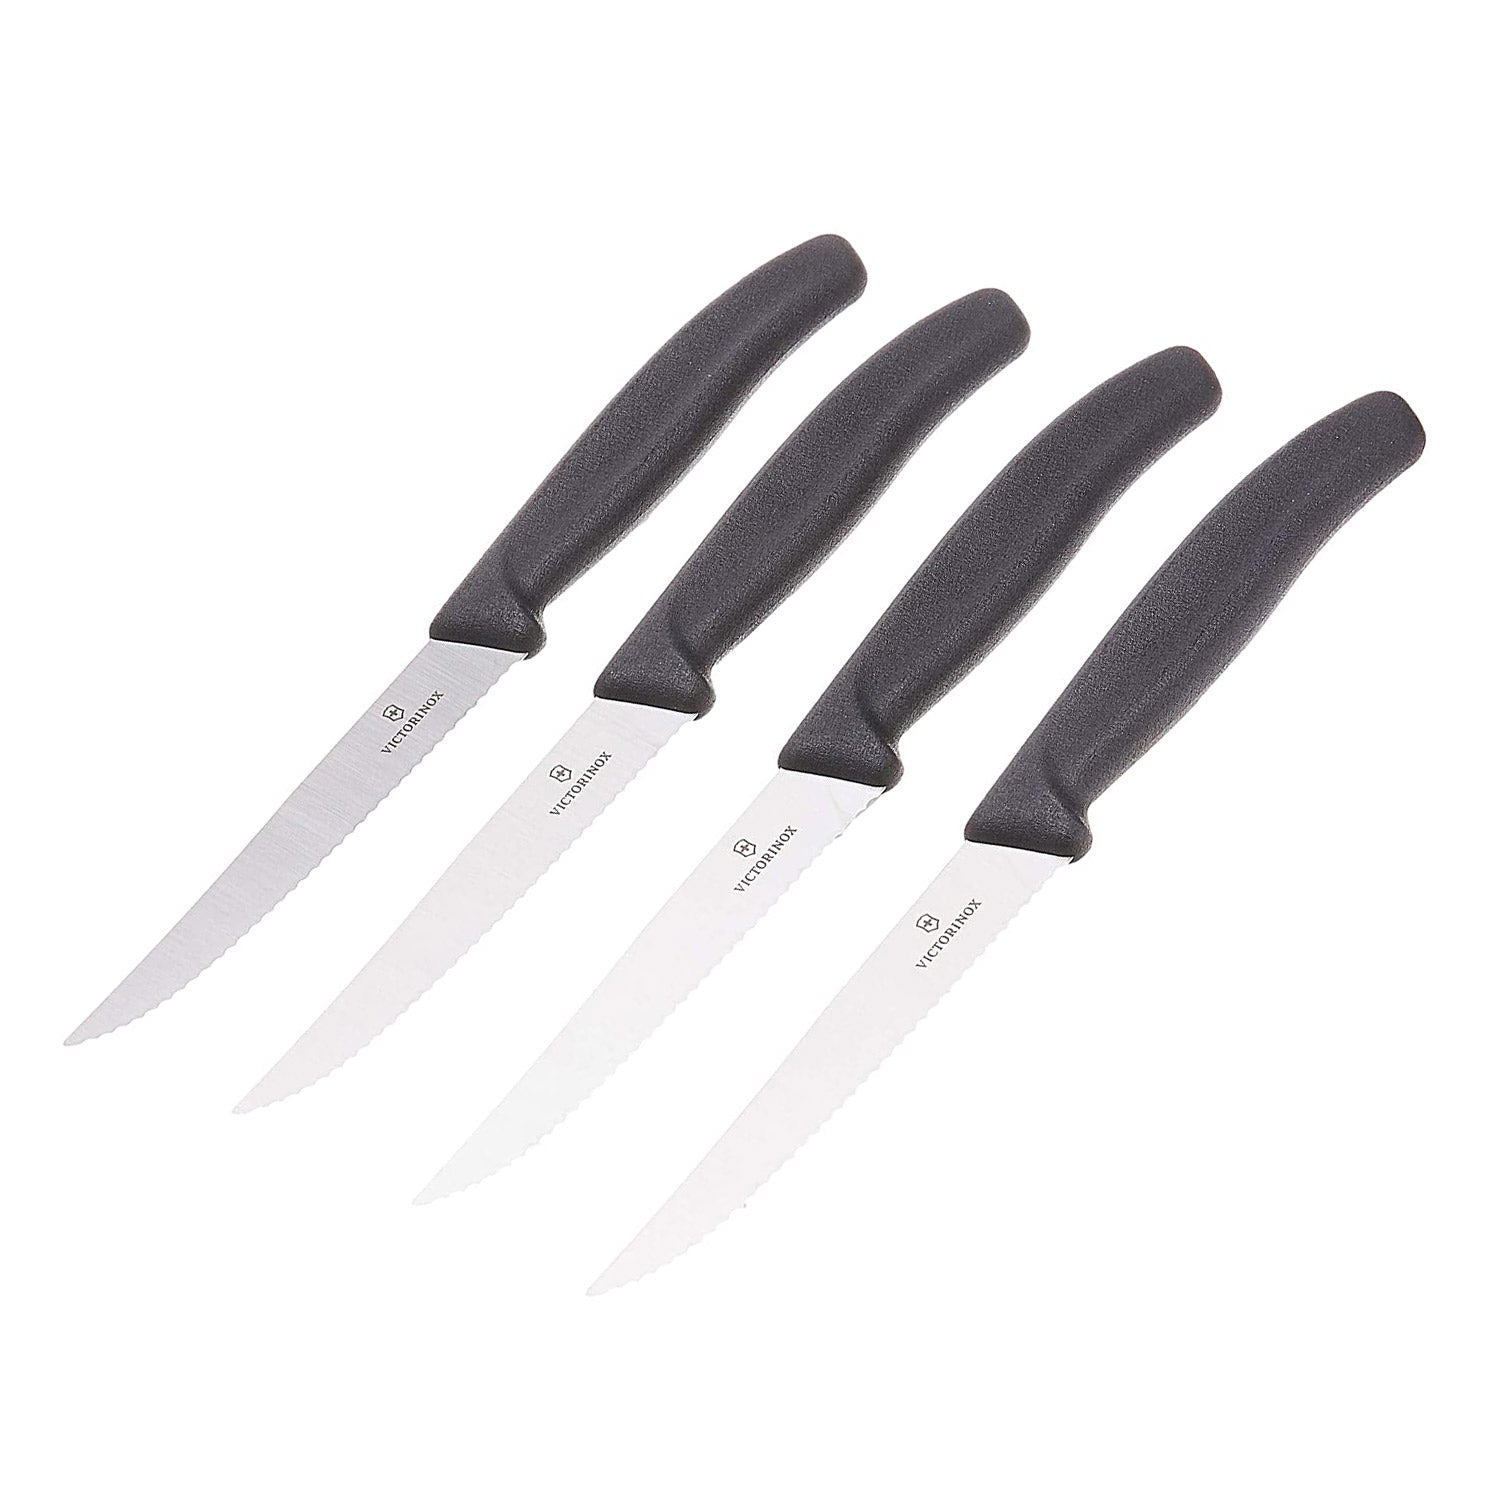 Victorinox Swiss Classic Steak Knife - Black - 4 in